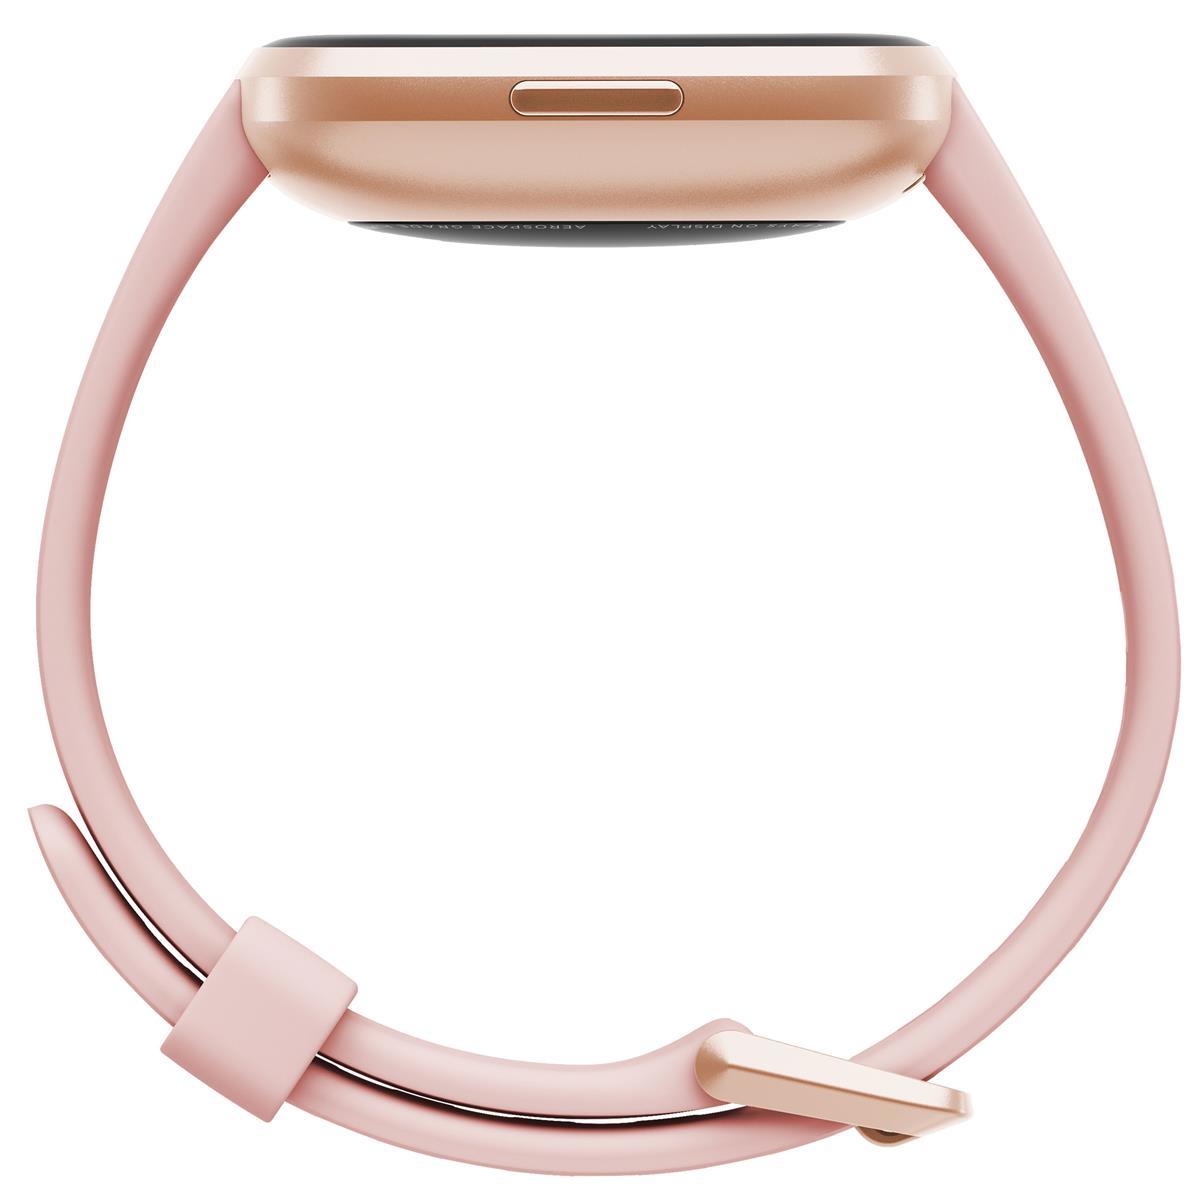 Fitbit Versa 2 Health and Fitness Smartwatch Petal/Copper Rose Aluminum